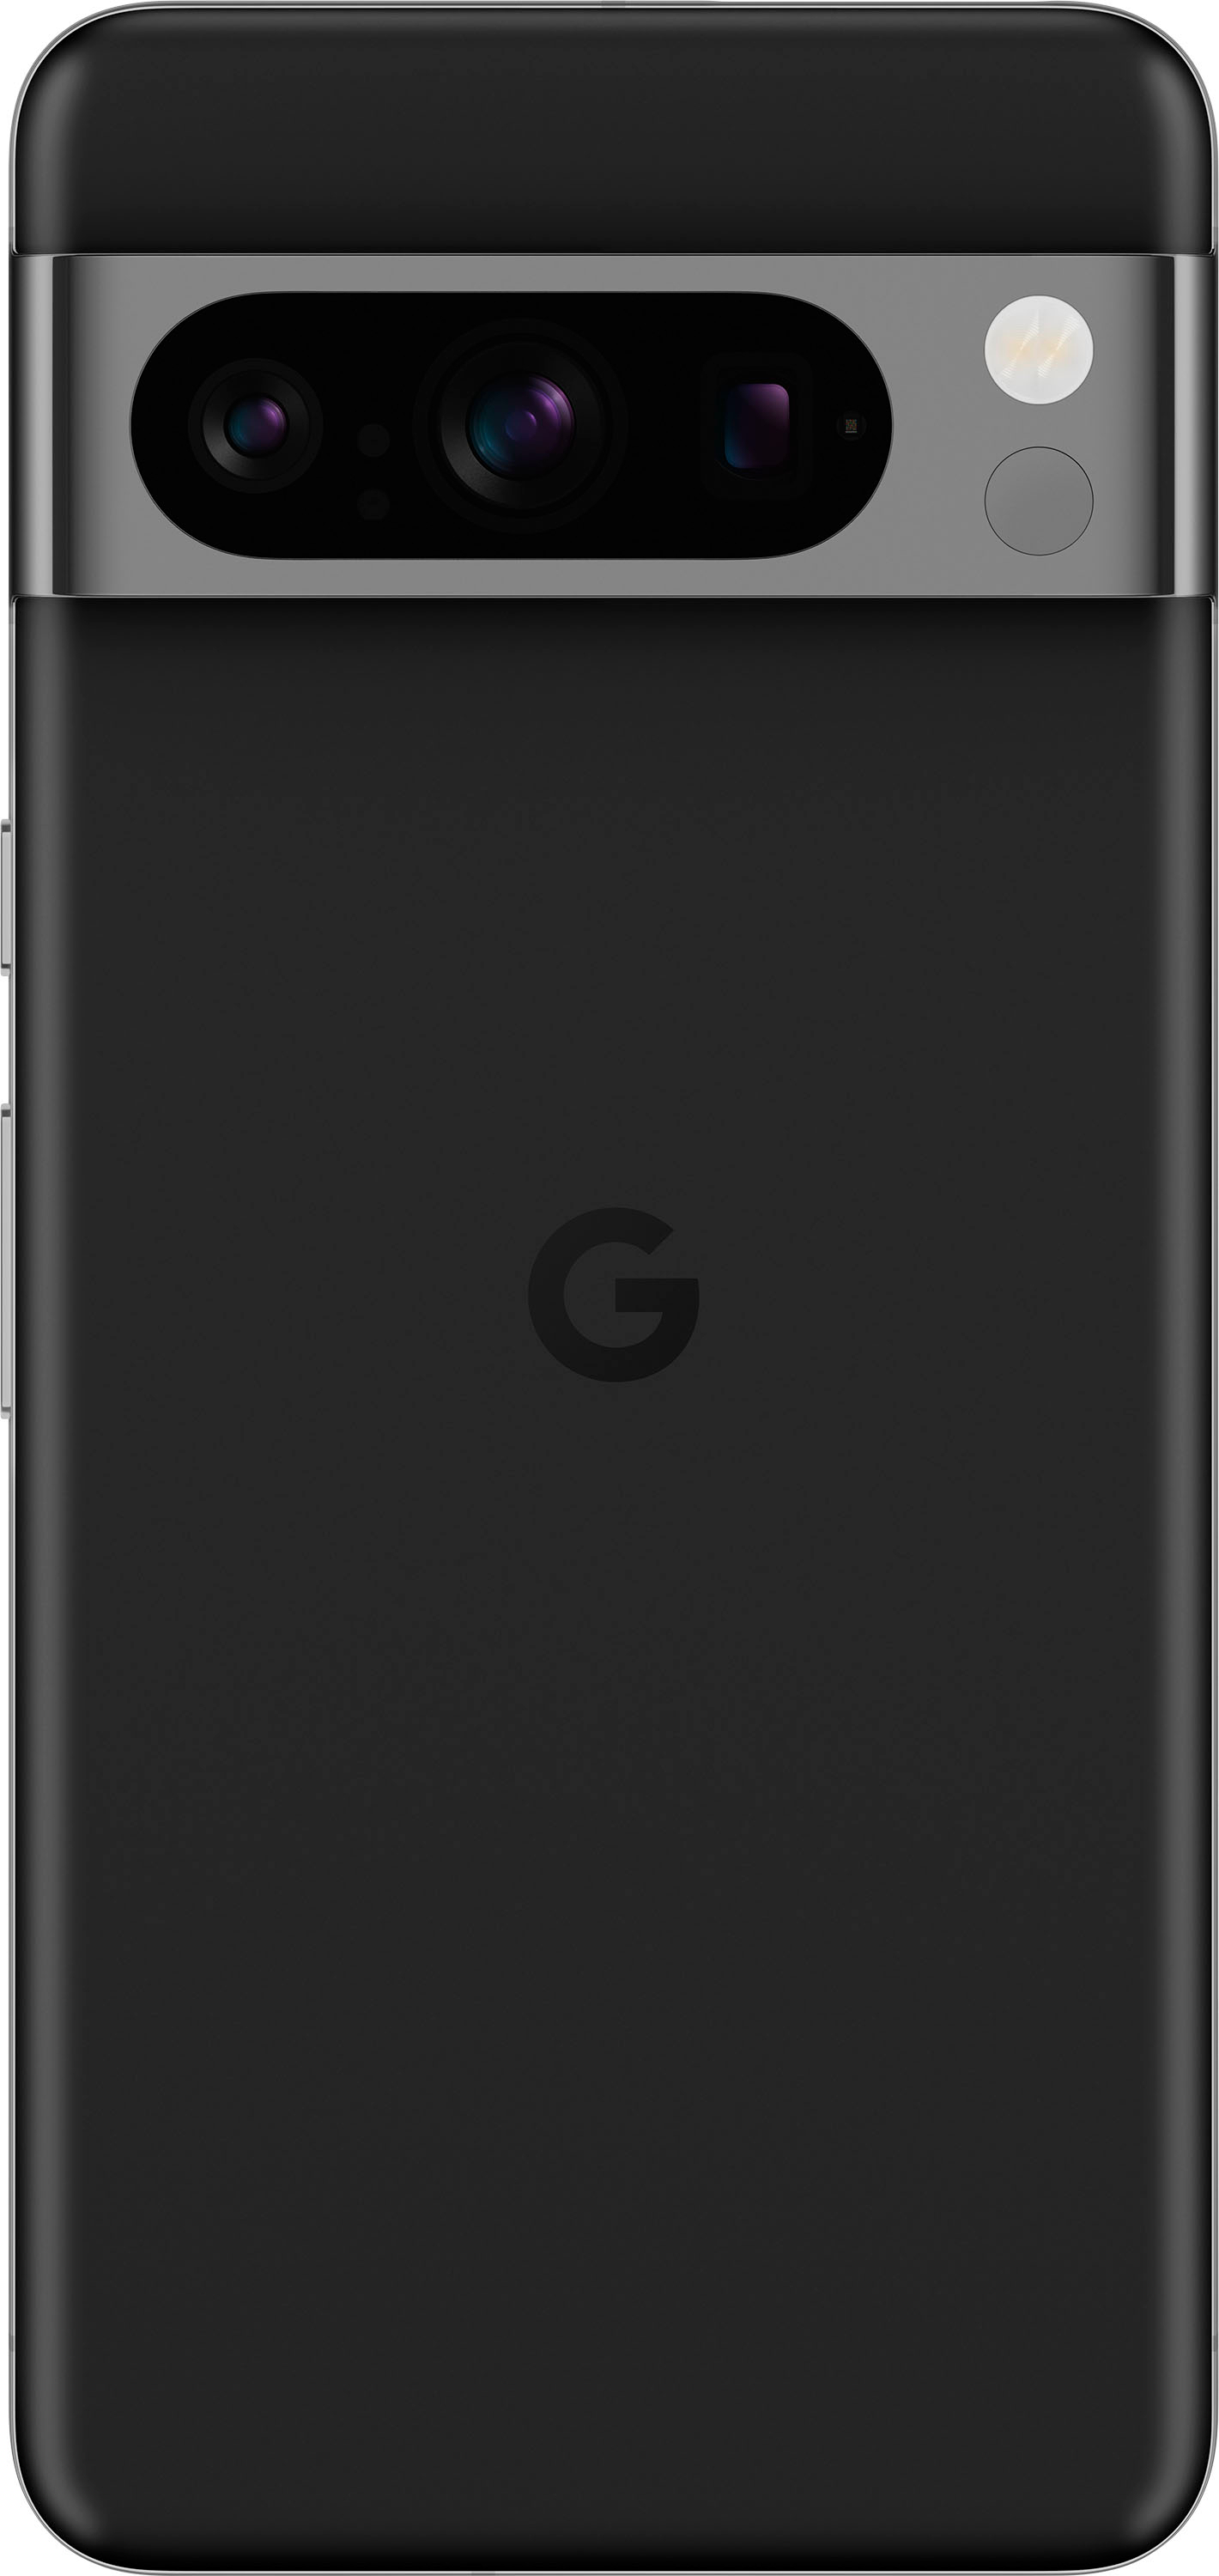 Google Pixel 8 Pro 5g Unlocked (128gb) Smartphone : Target